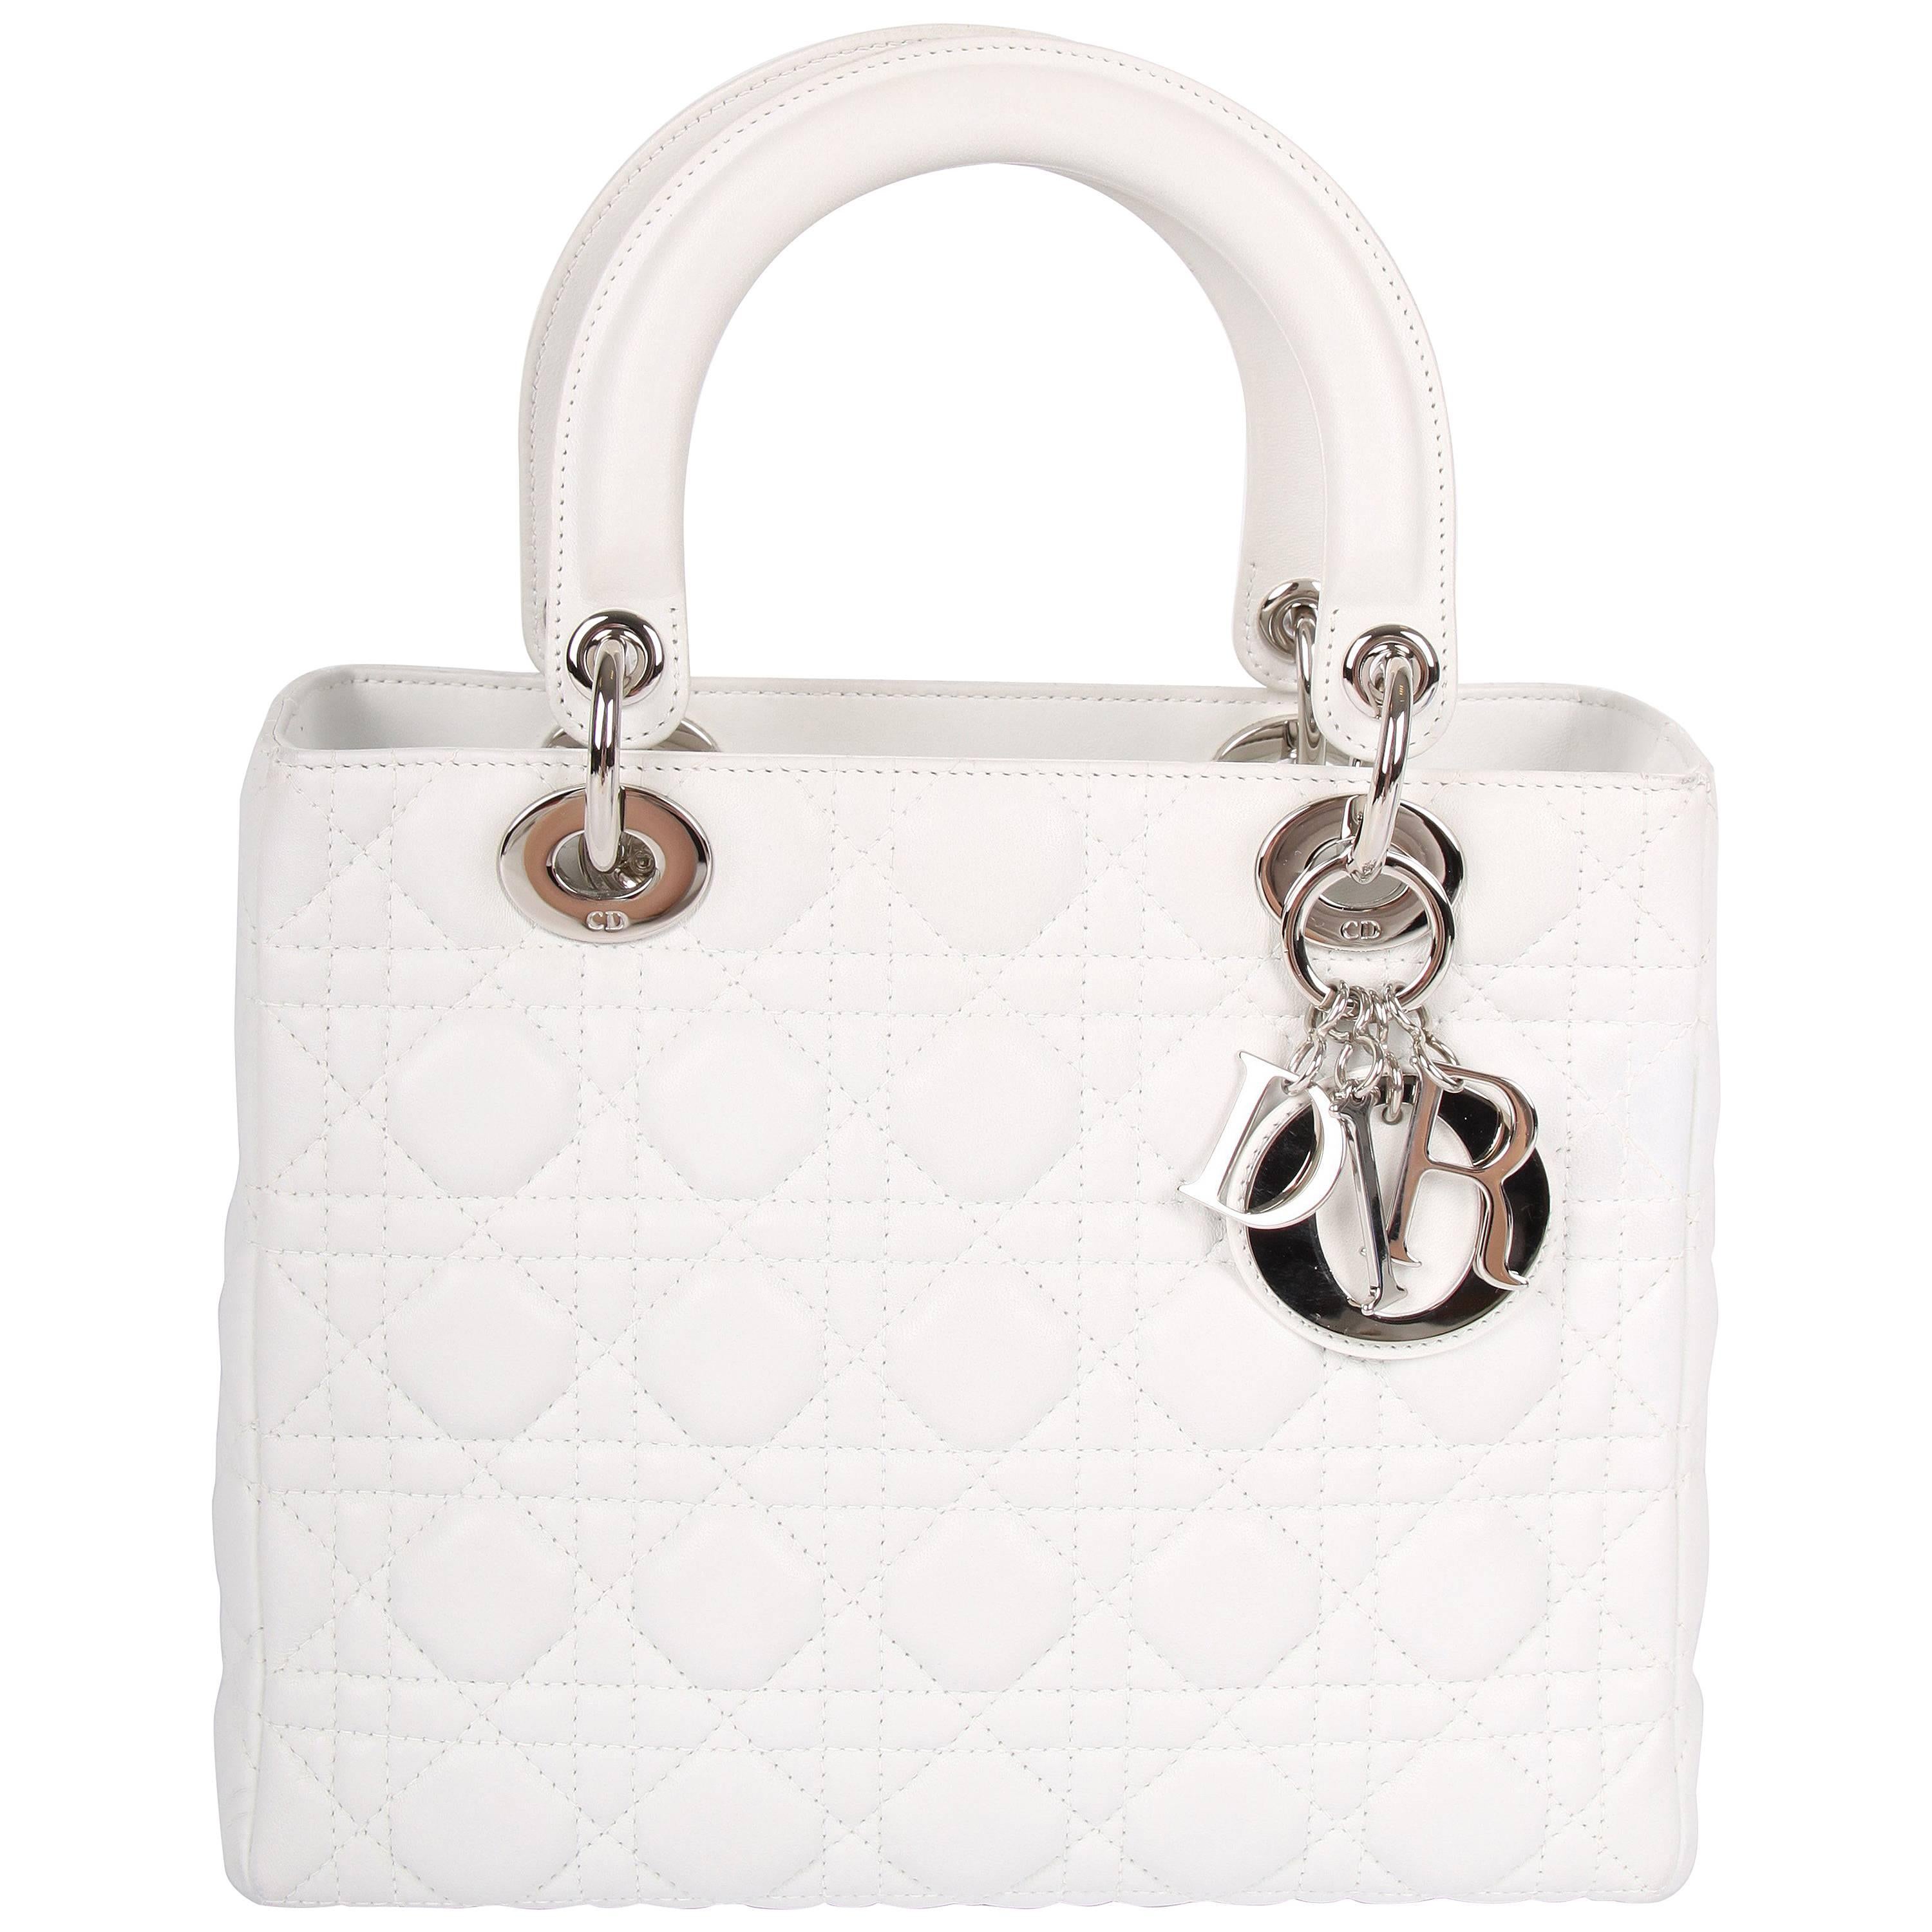 My Lady Dior Bag 24 - white